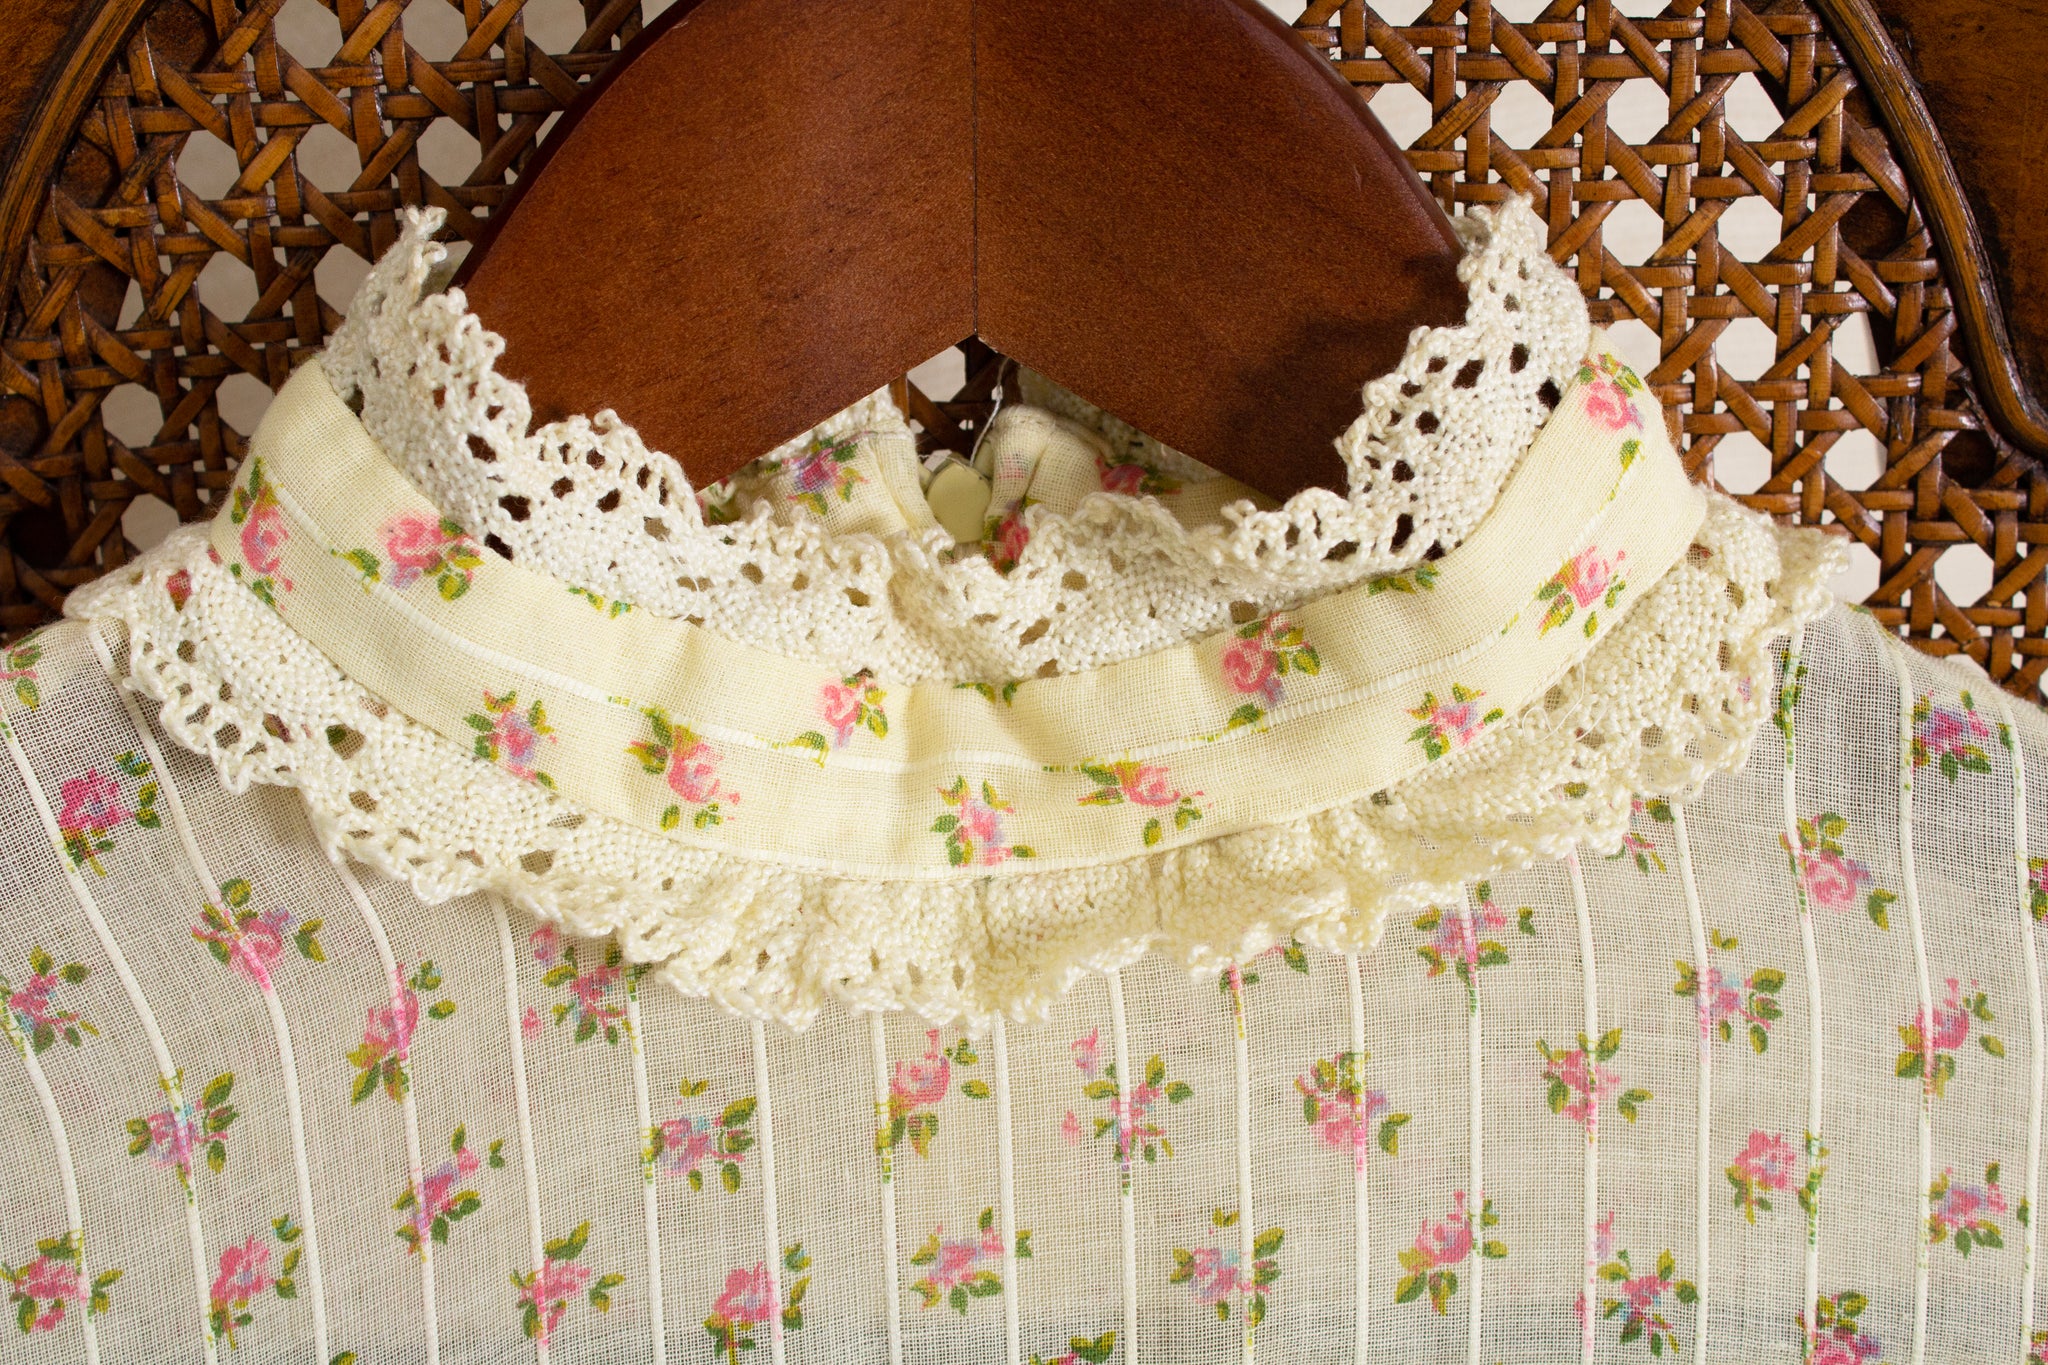 Peck & Peck Ditsy Floral Skirt Set